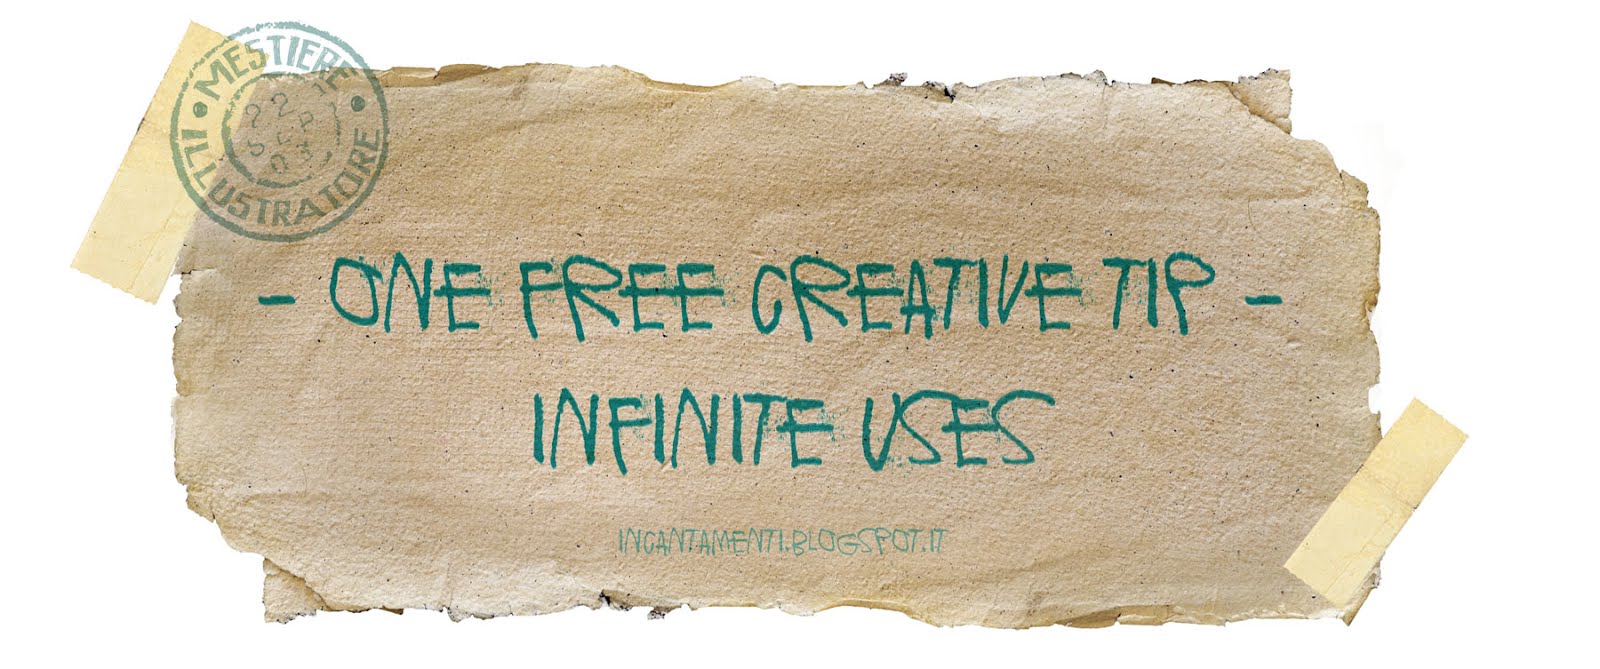 Free Creative Tips